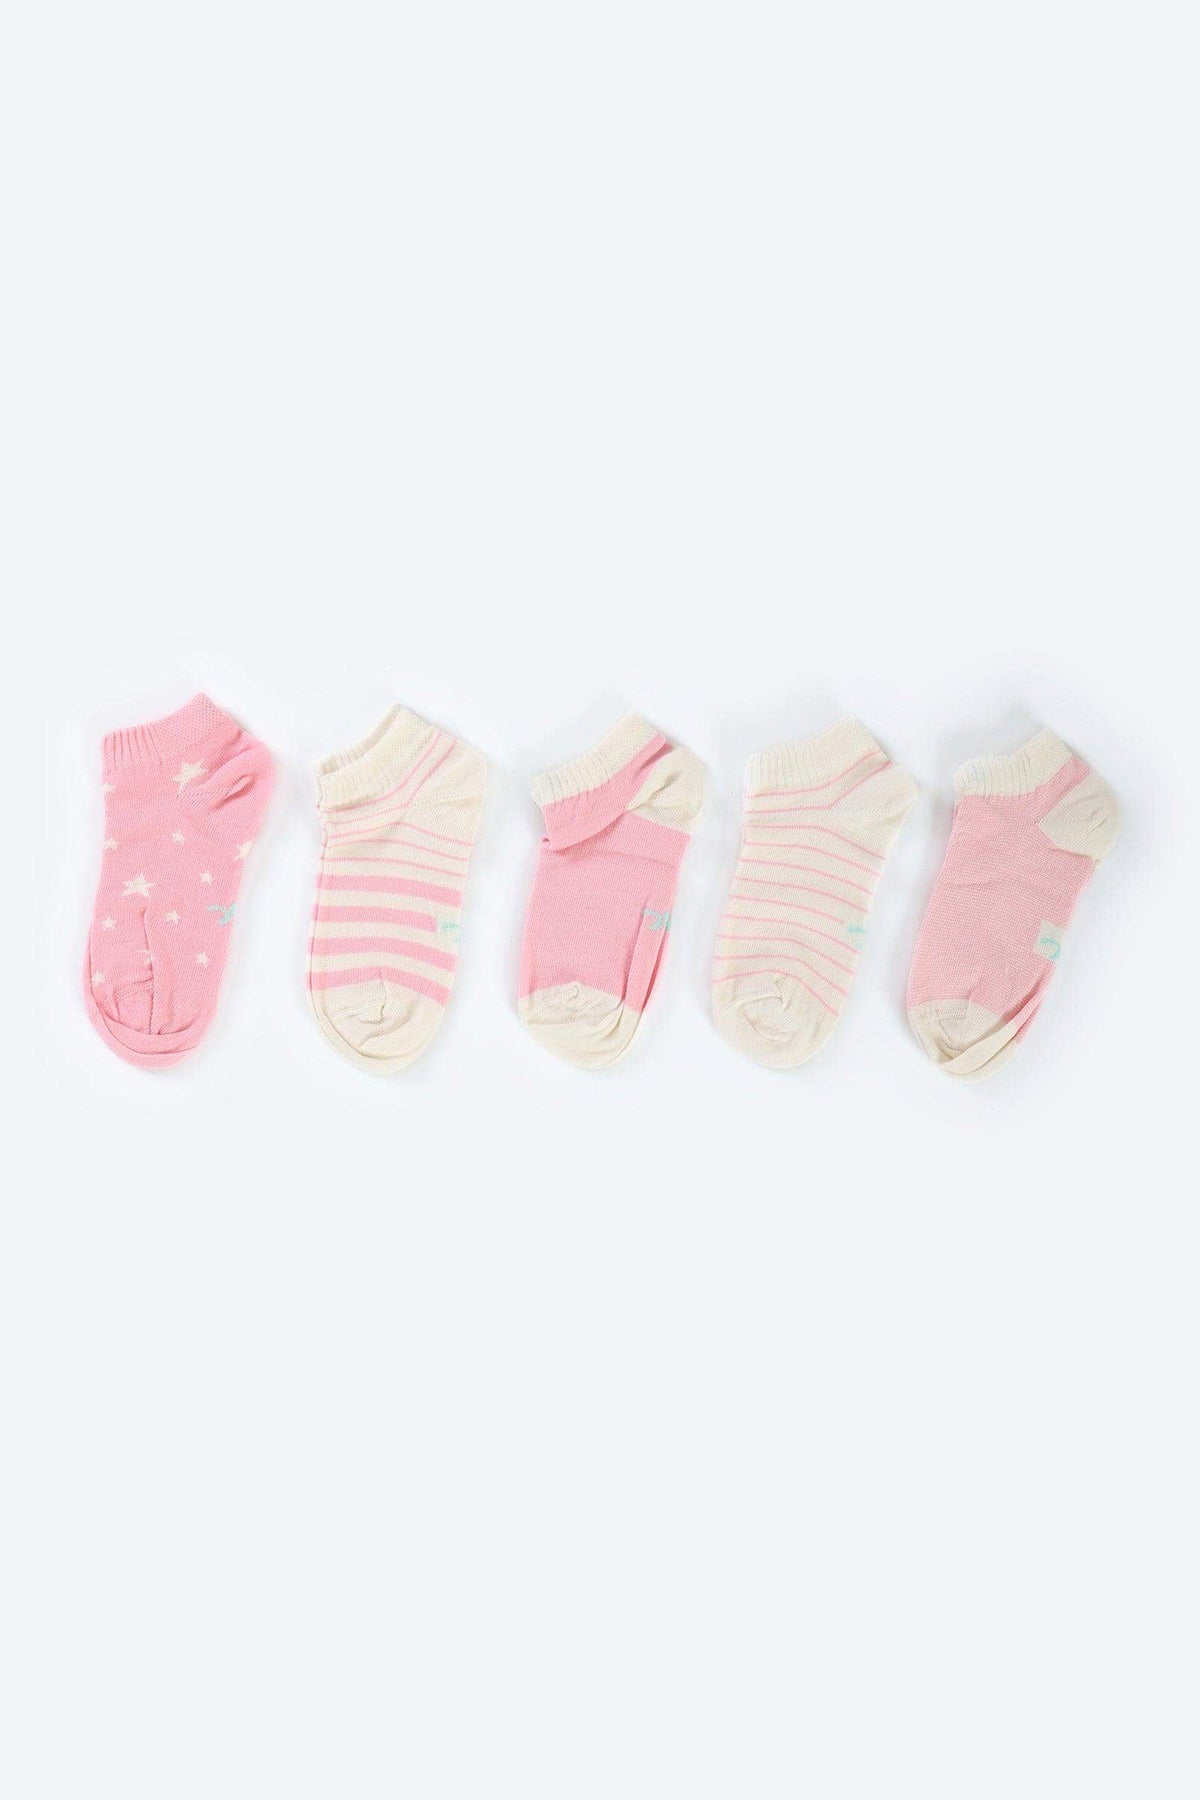 Girly Cotton Ankle Socks - 5 Pairs - Carina - كارينا